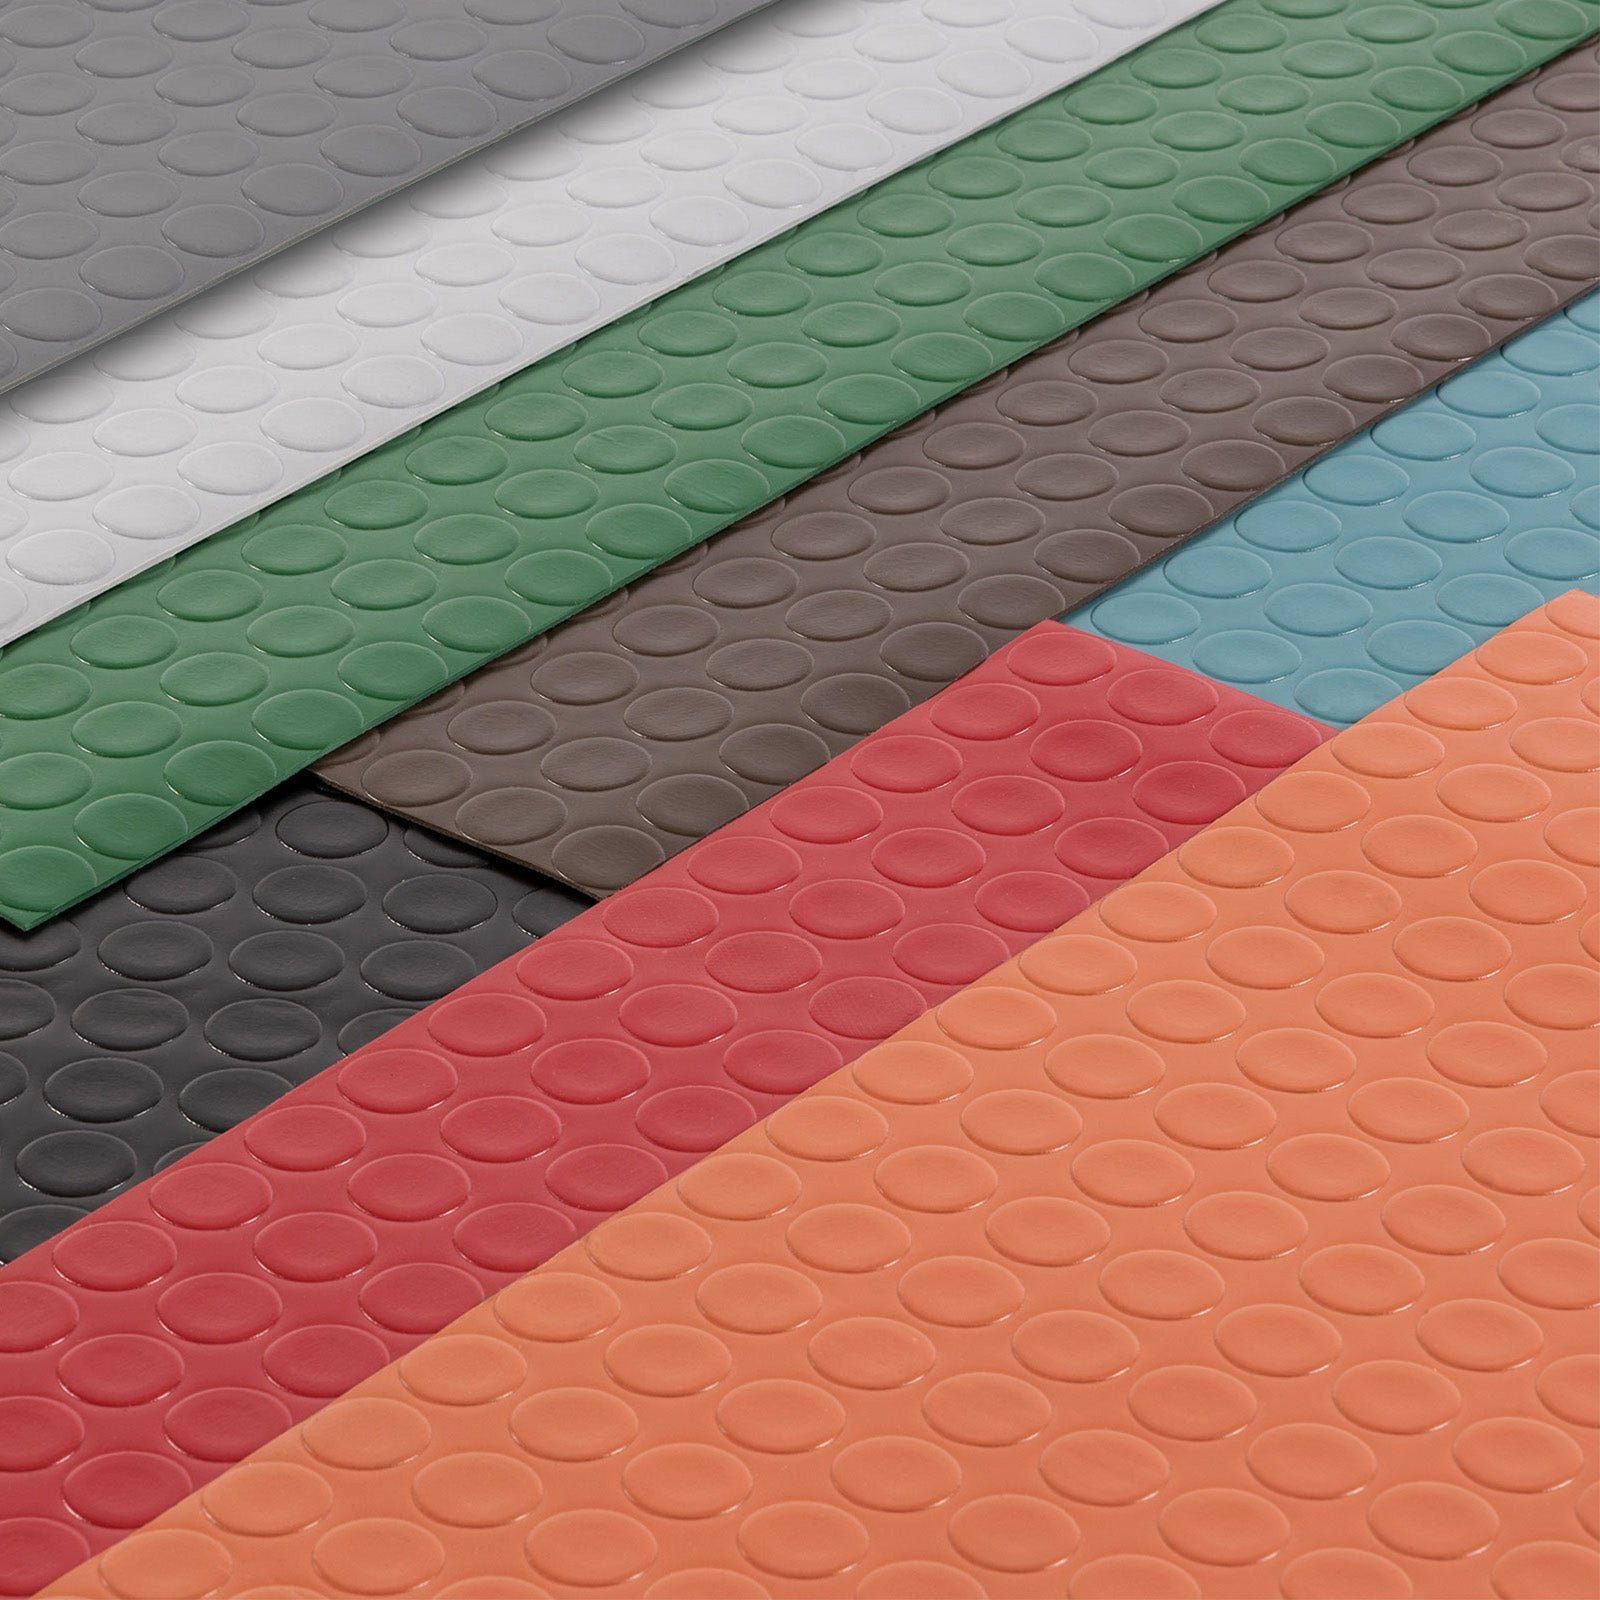 PVC-Bodenbelag, 2mm, Große viele Stärke Farben Dunkelgrau Noppen, Bodenschutzmatte Kubus